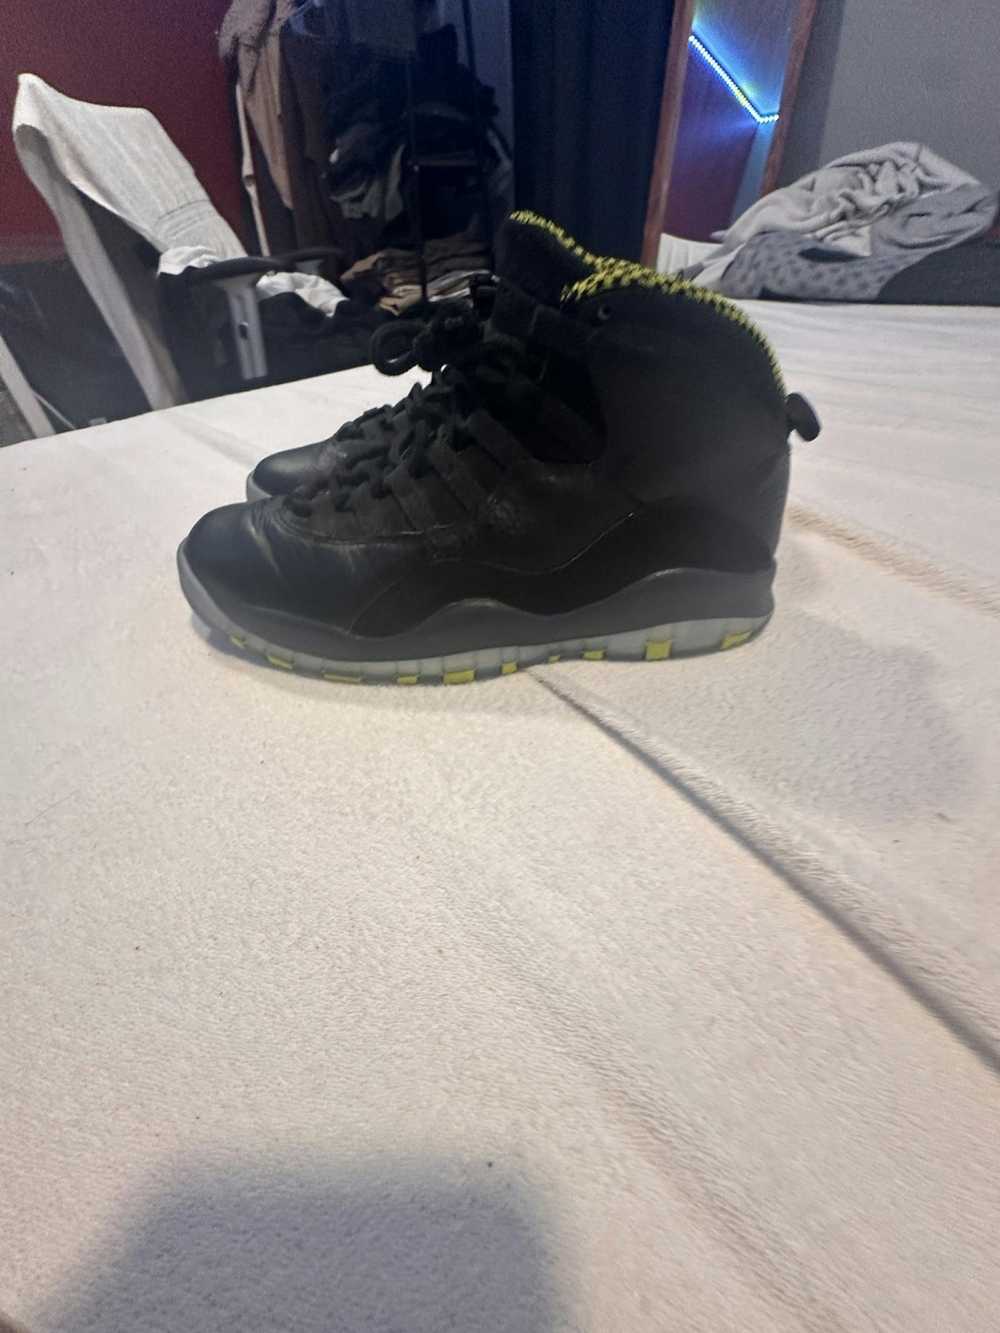 Jordan Brand × Nike Jordan retro 10 venoms - image 4